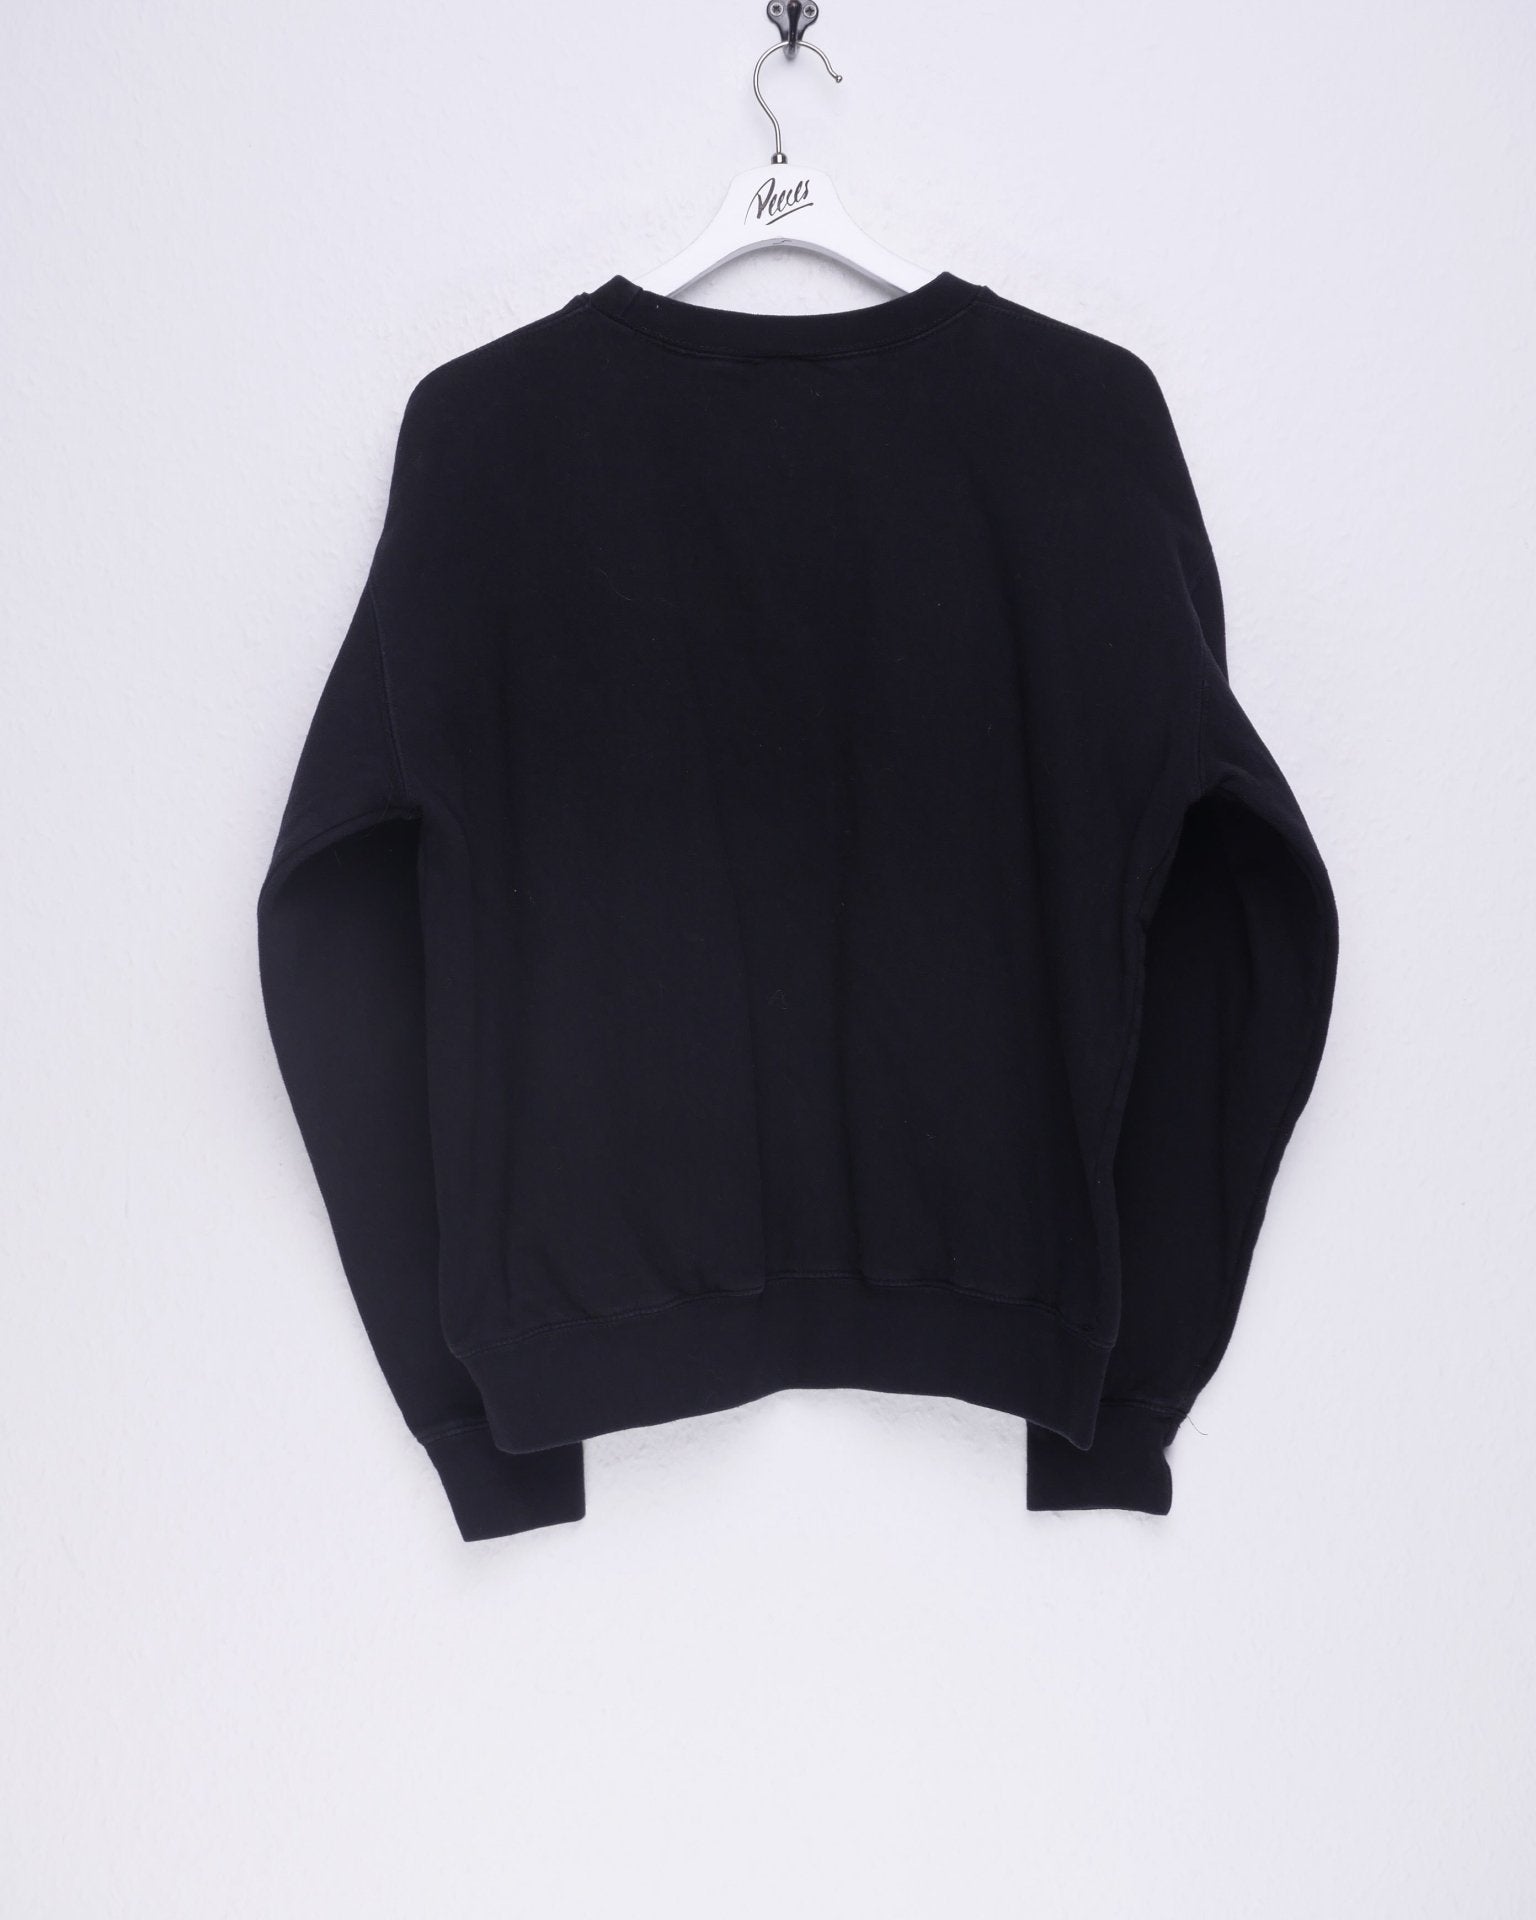 Adidas pinted Big Logo black Sweater - Peeces